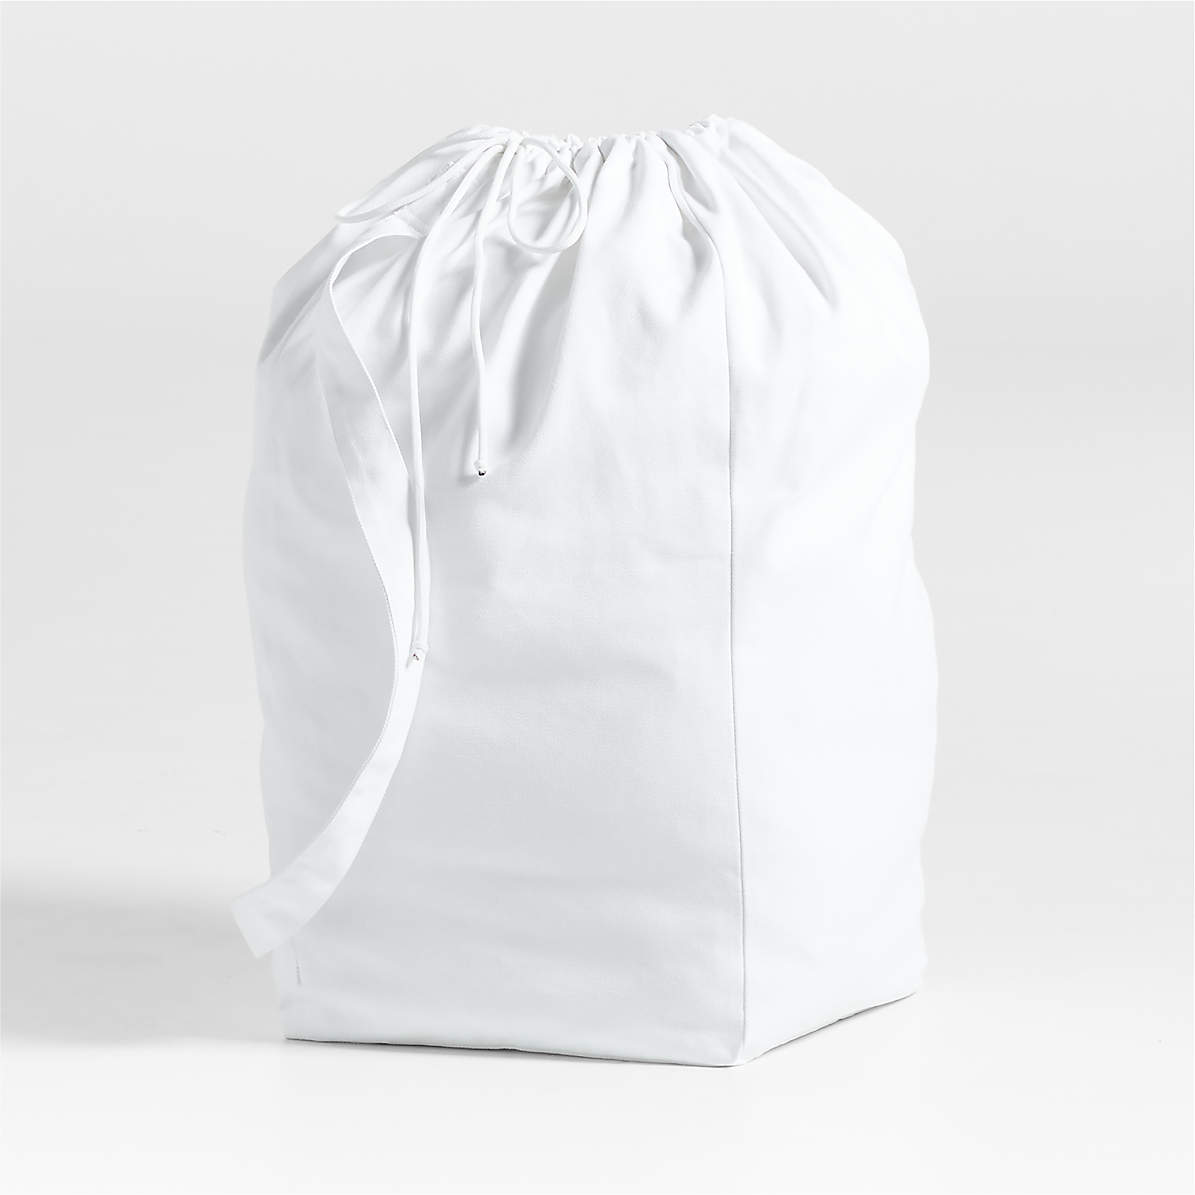 Brown Rattan Wicker w/ Fabric Cloth Bag Insert Laundry Basket Hamper w/  Handles | eBay